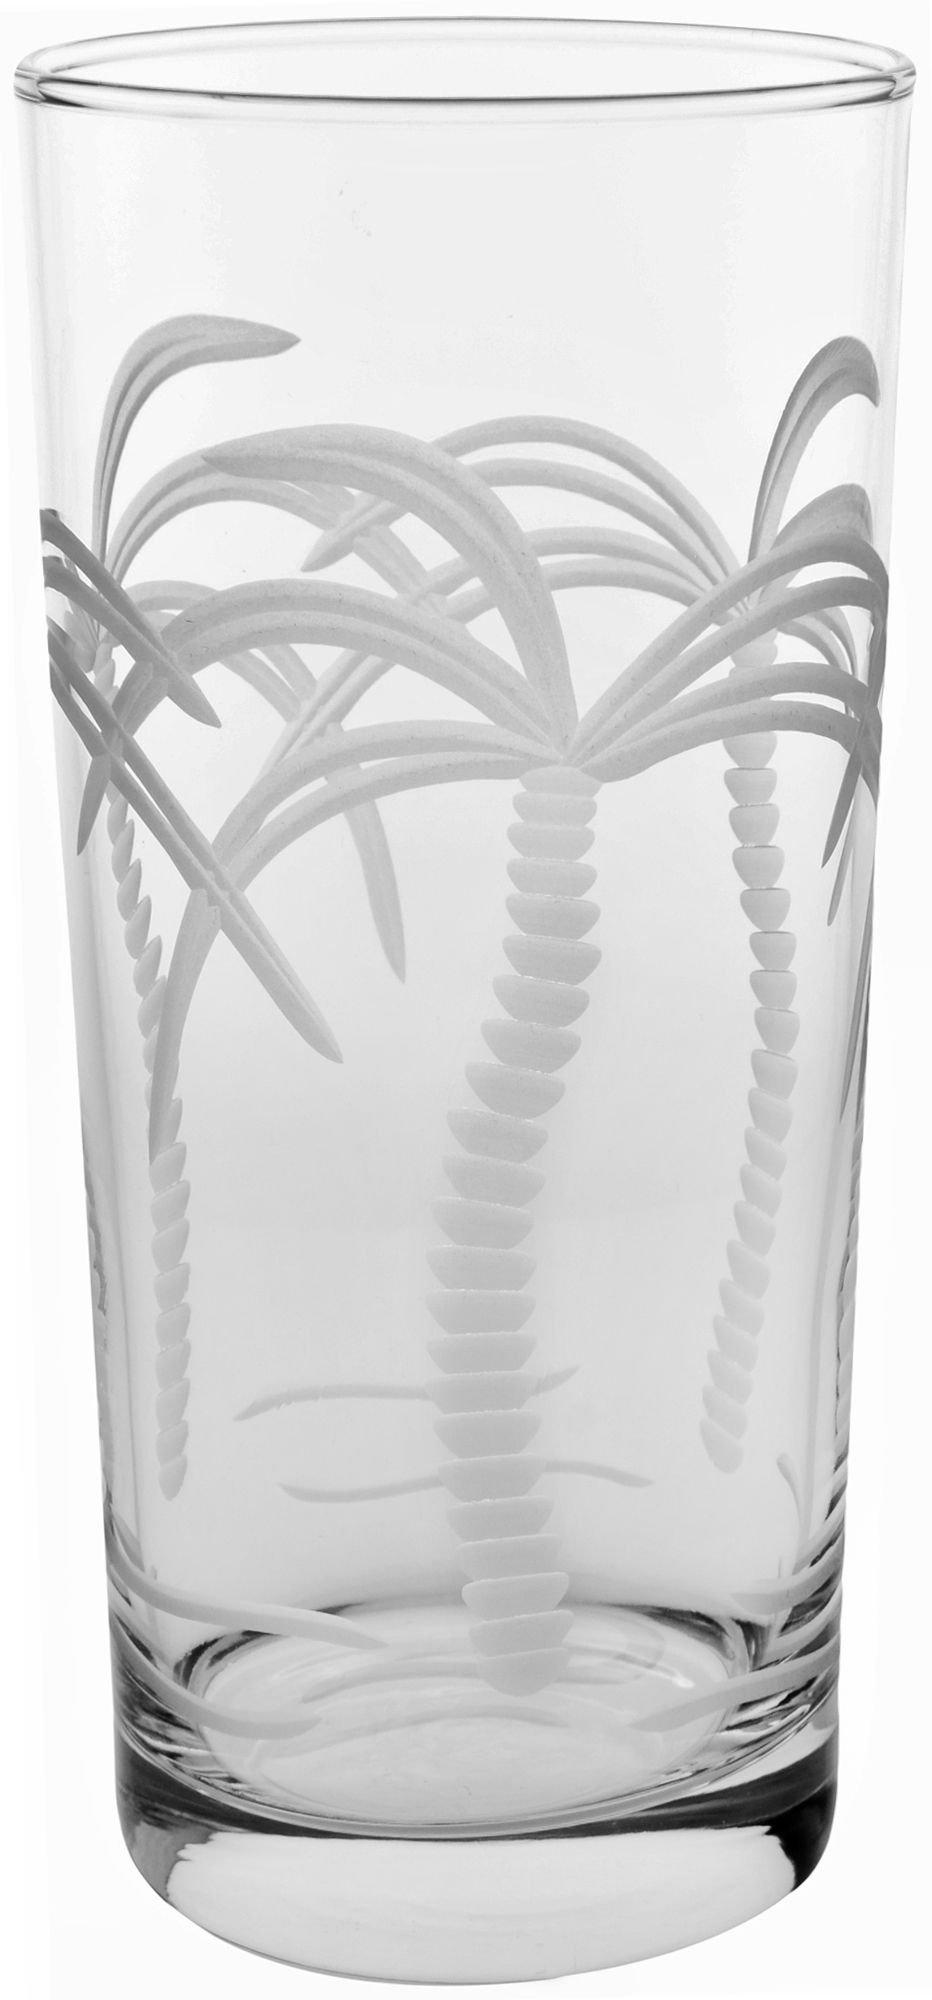 Rolf Glass 15 oz. Palm Tree Cooler Glass